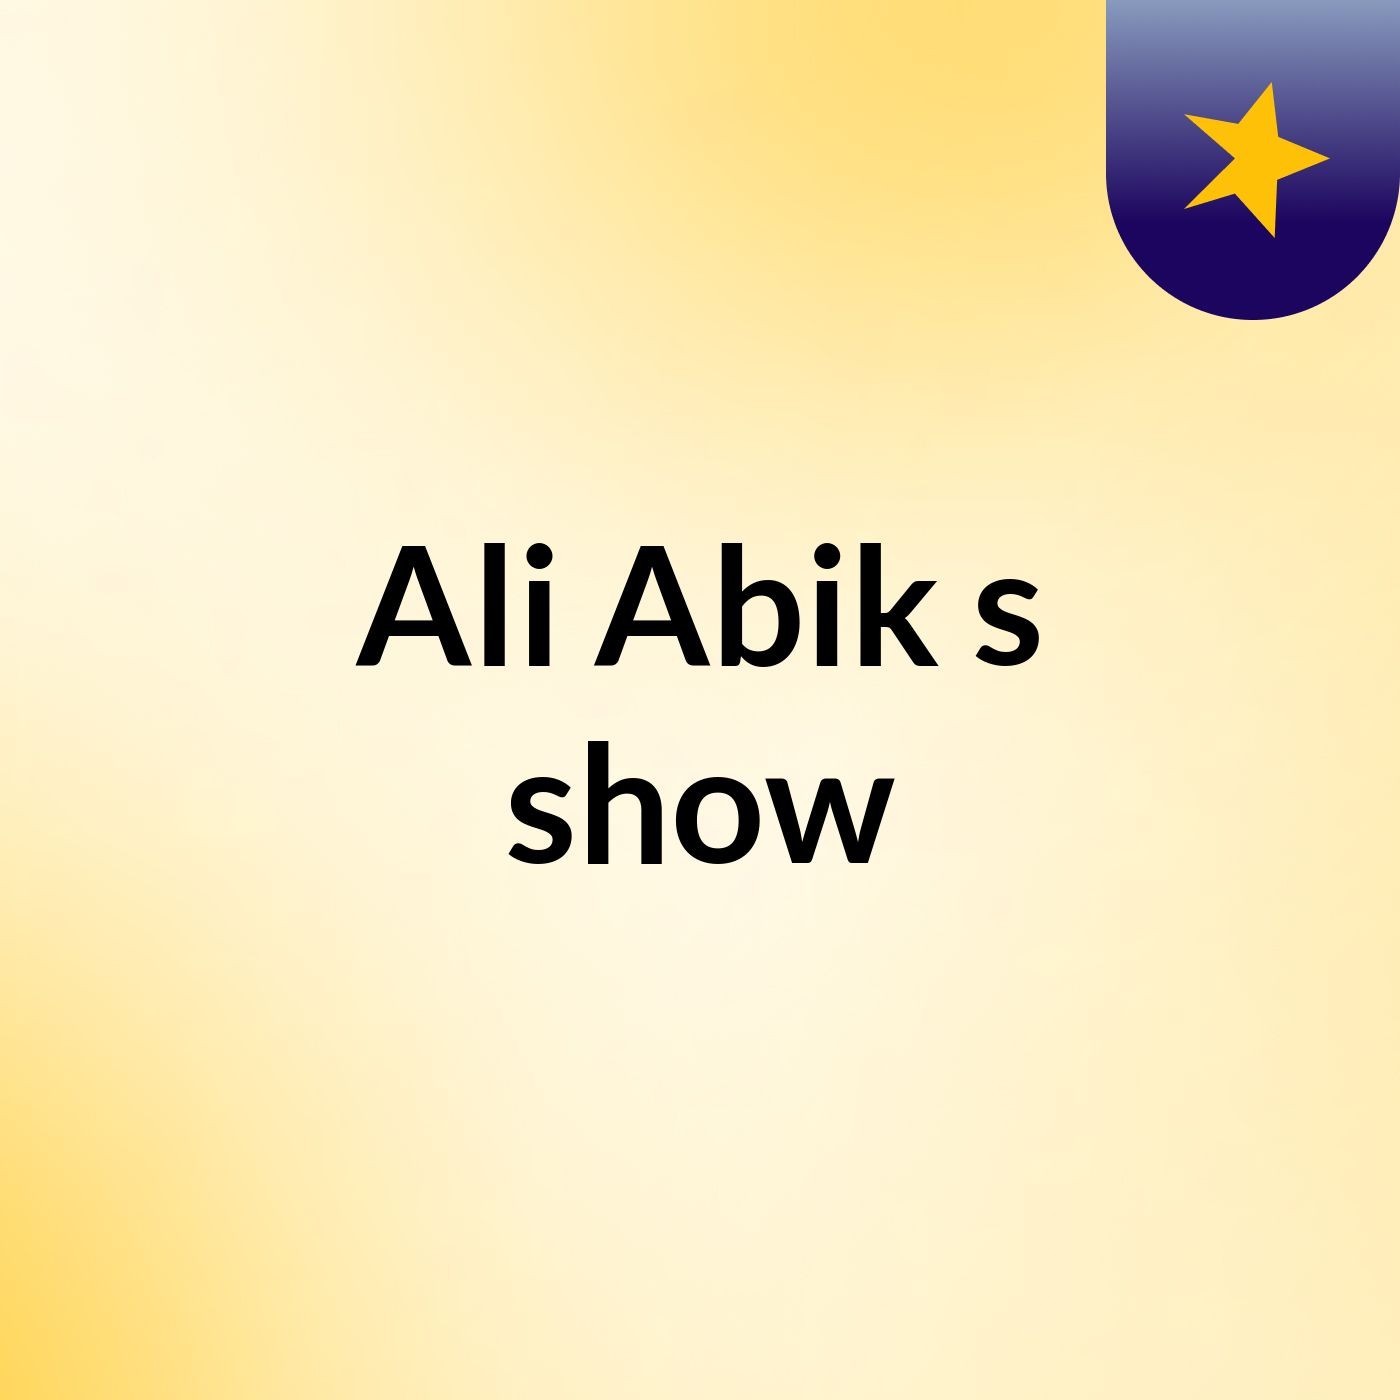 Ali Abik's show